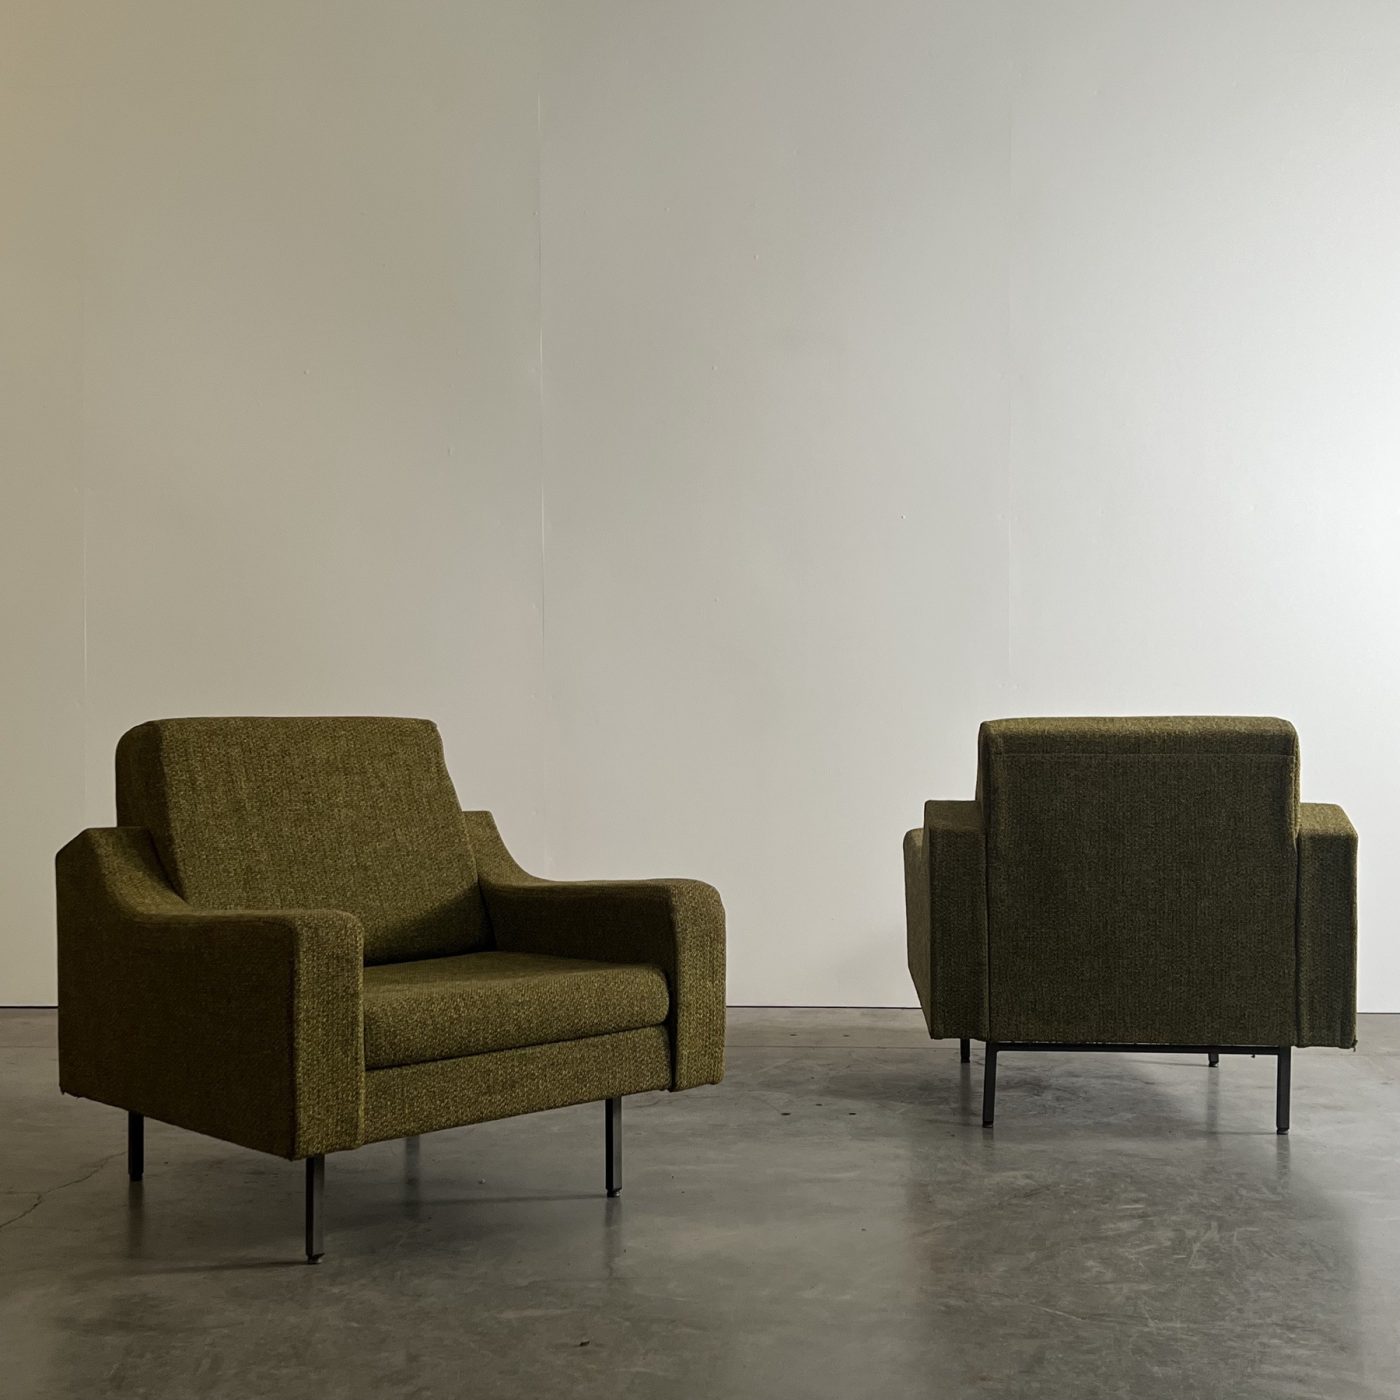 objet-vagabond-rmidcentury-armchairs0008